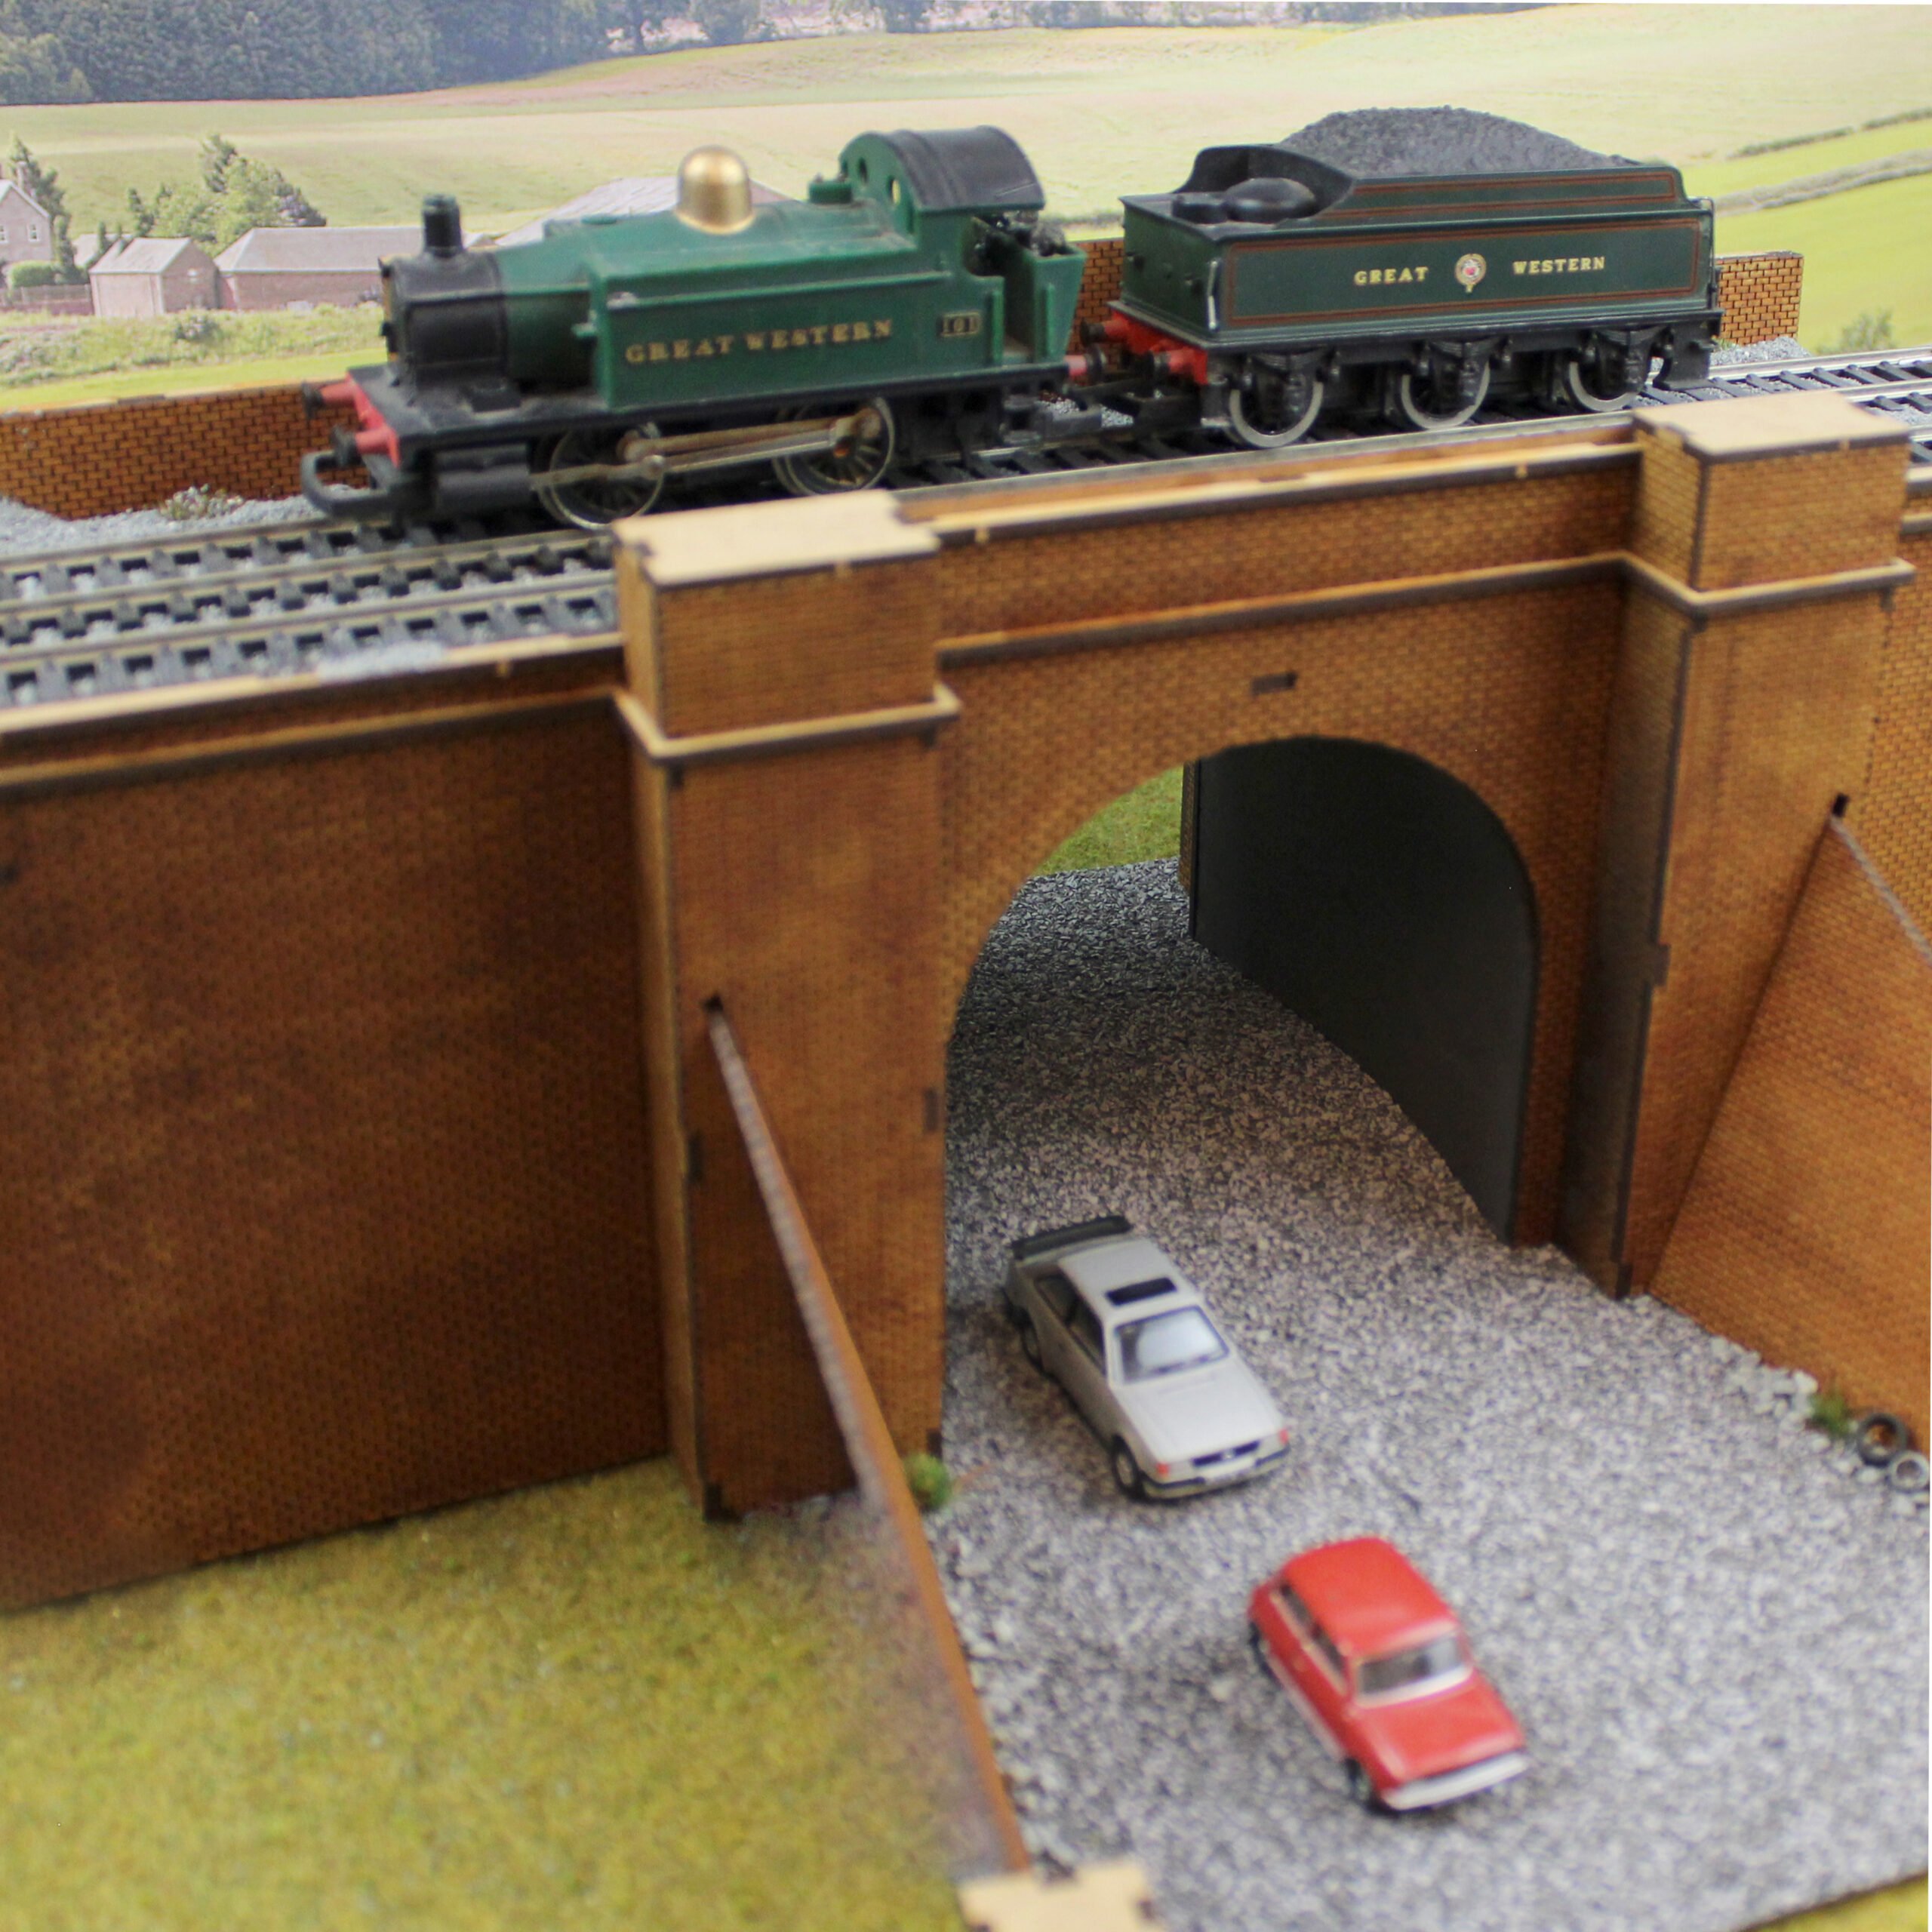 Building a model railway